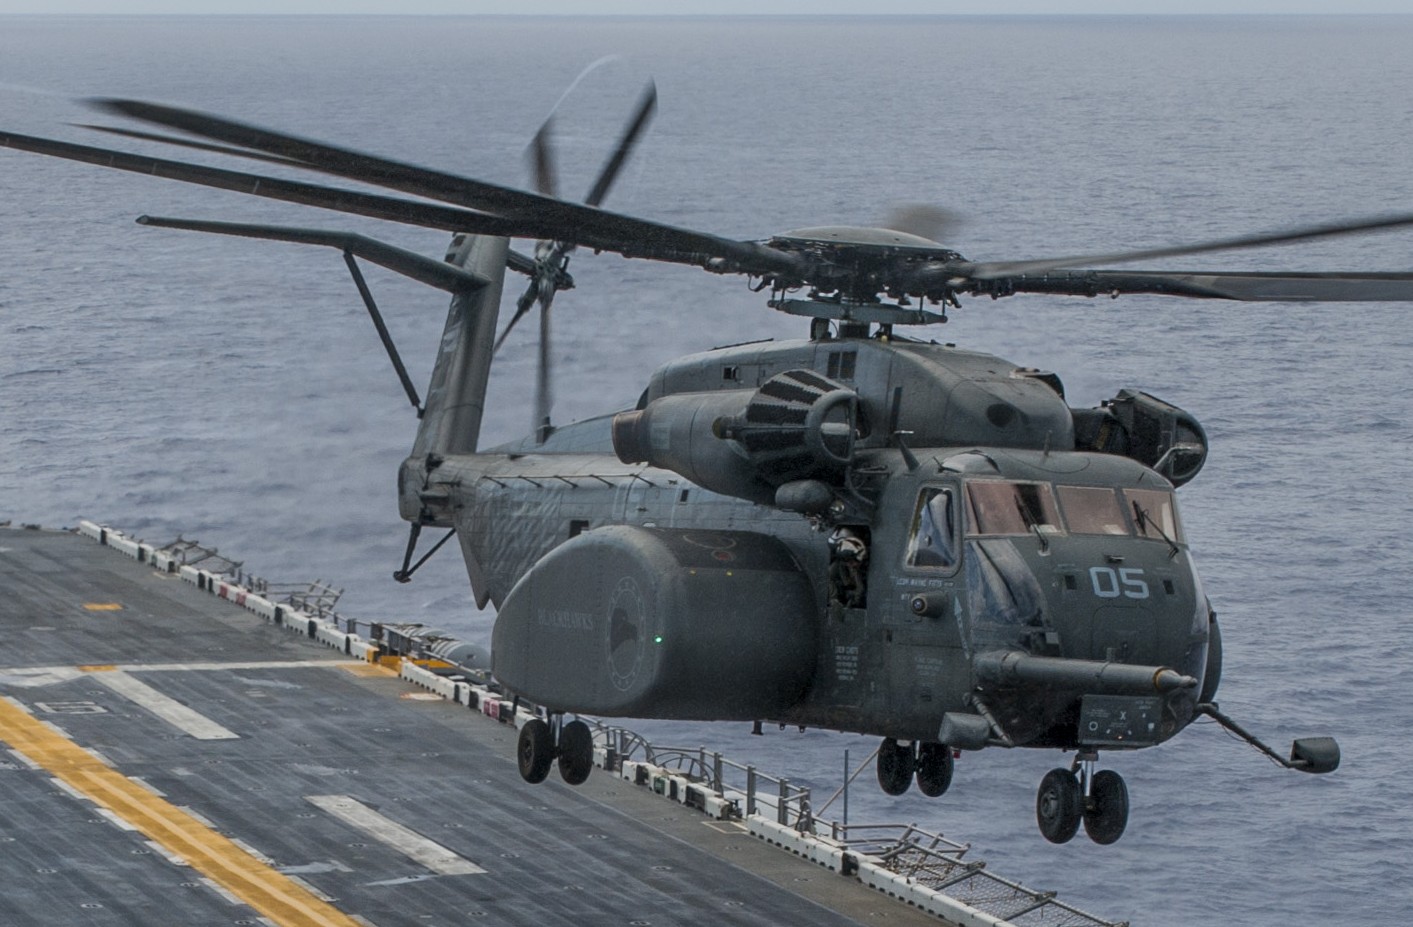 hm-15 blackhawks helicopter mine countermeasures squadron navy mh-53e sea dragon 15